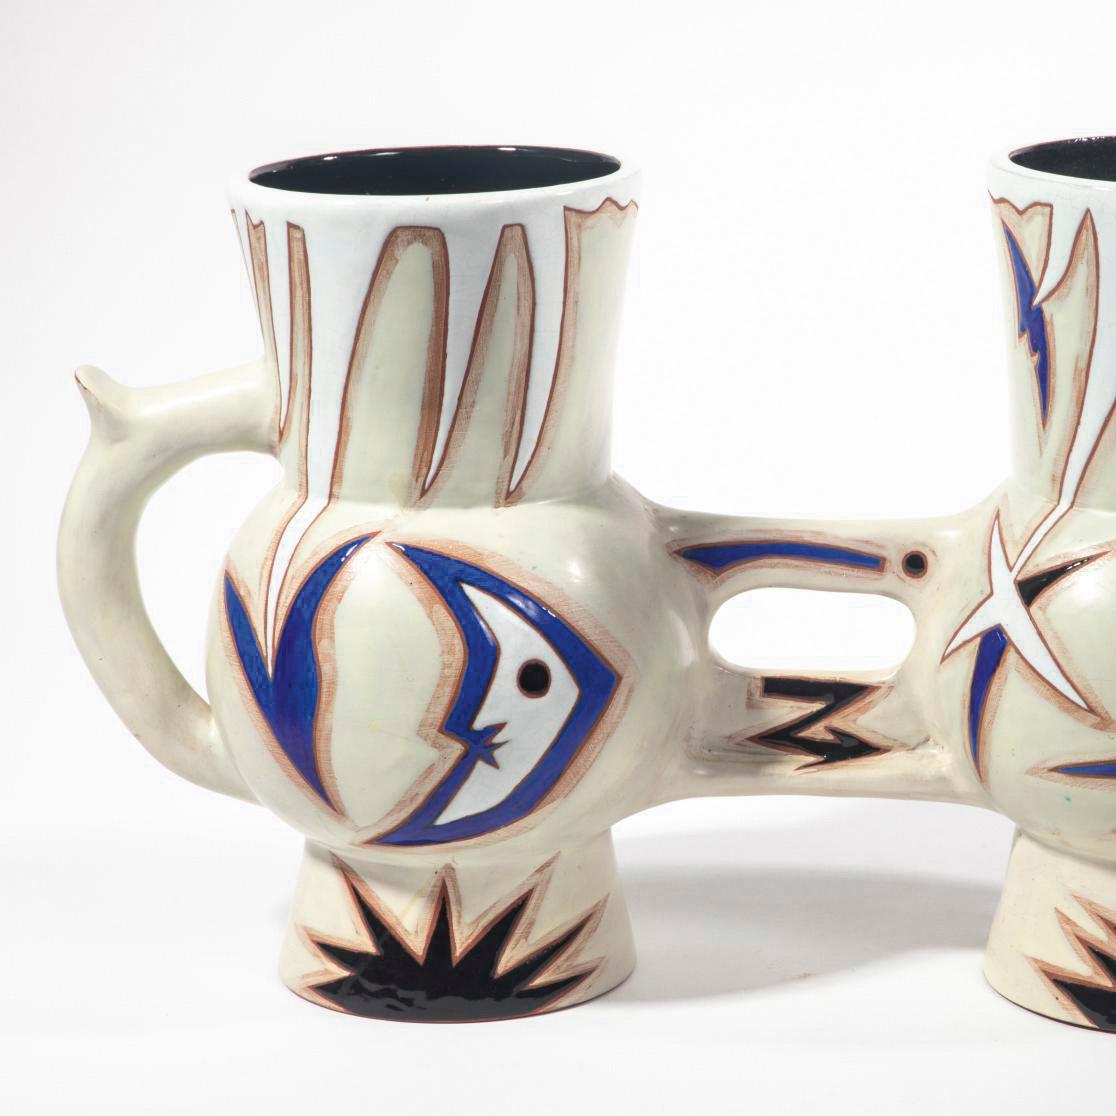 Art Price Index: Ceramics of Jean Lurçat - Market Trends